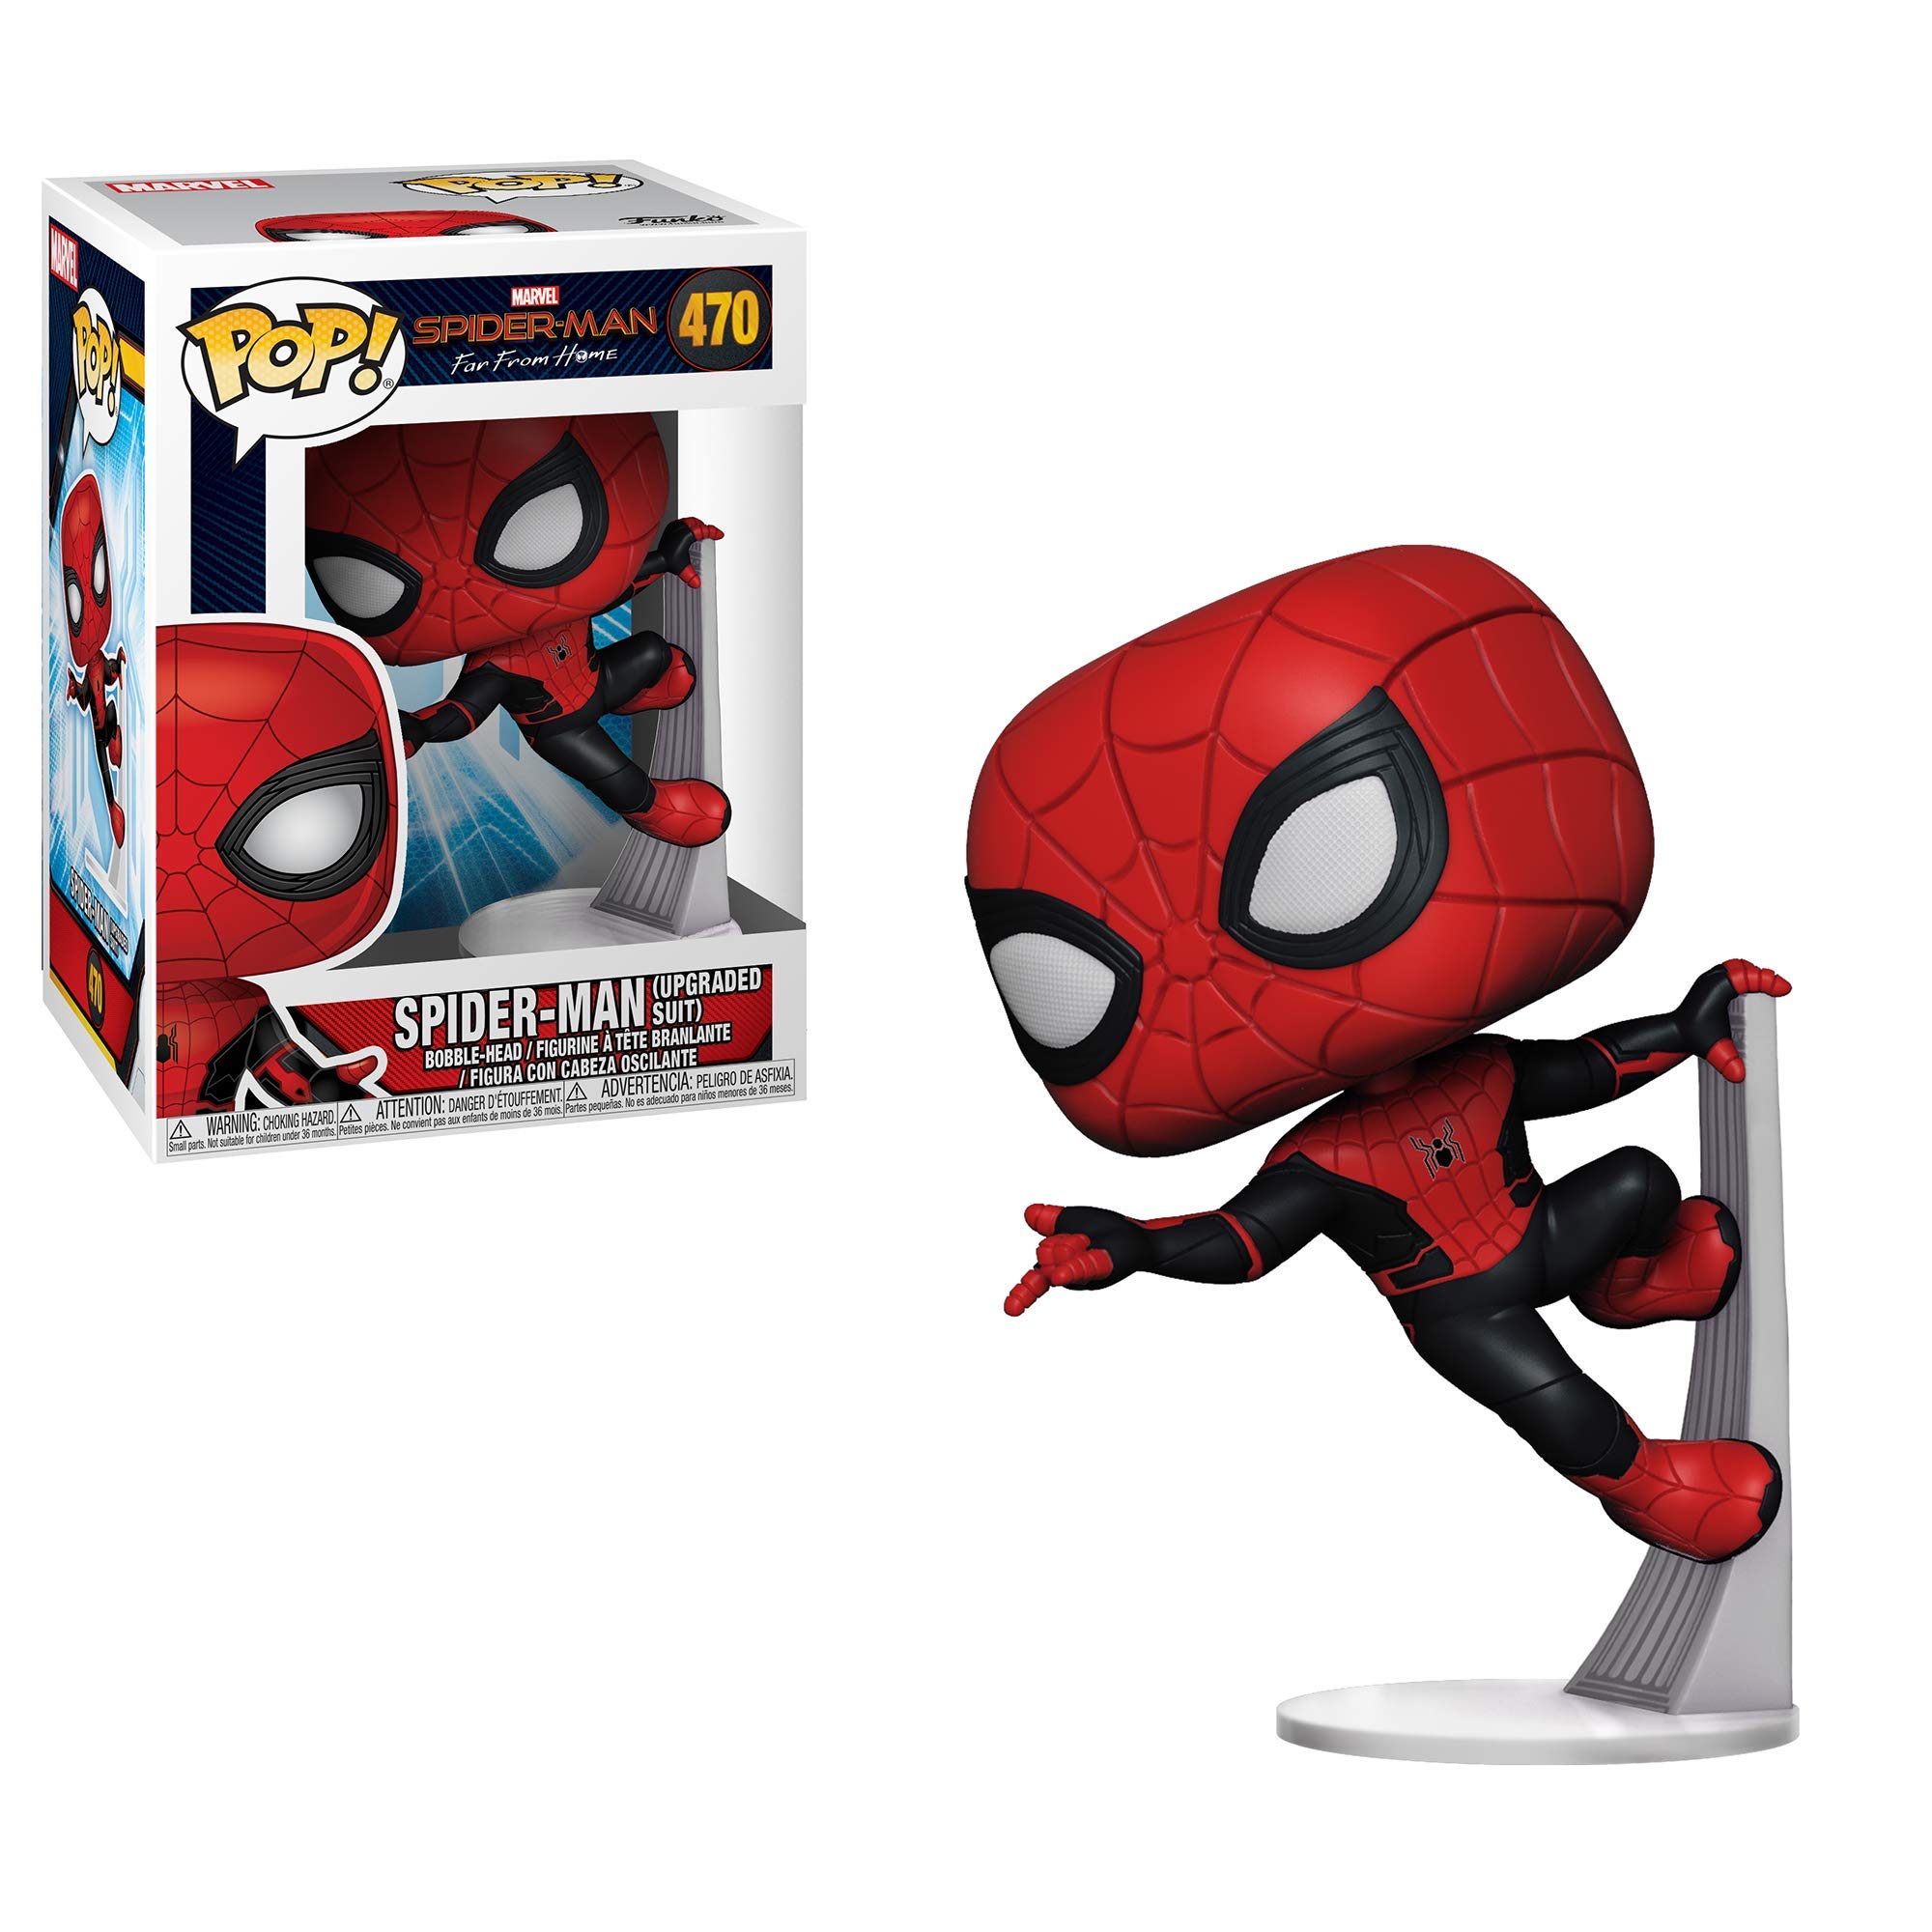 Mua Funko Pop! Marvel: Spider-Man Far from Home - Spider-Man Upgraded Suit,  Multicolor, Standard trên Amazon Mỹ chính hãng 2023 | Giaonhan247